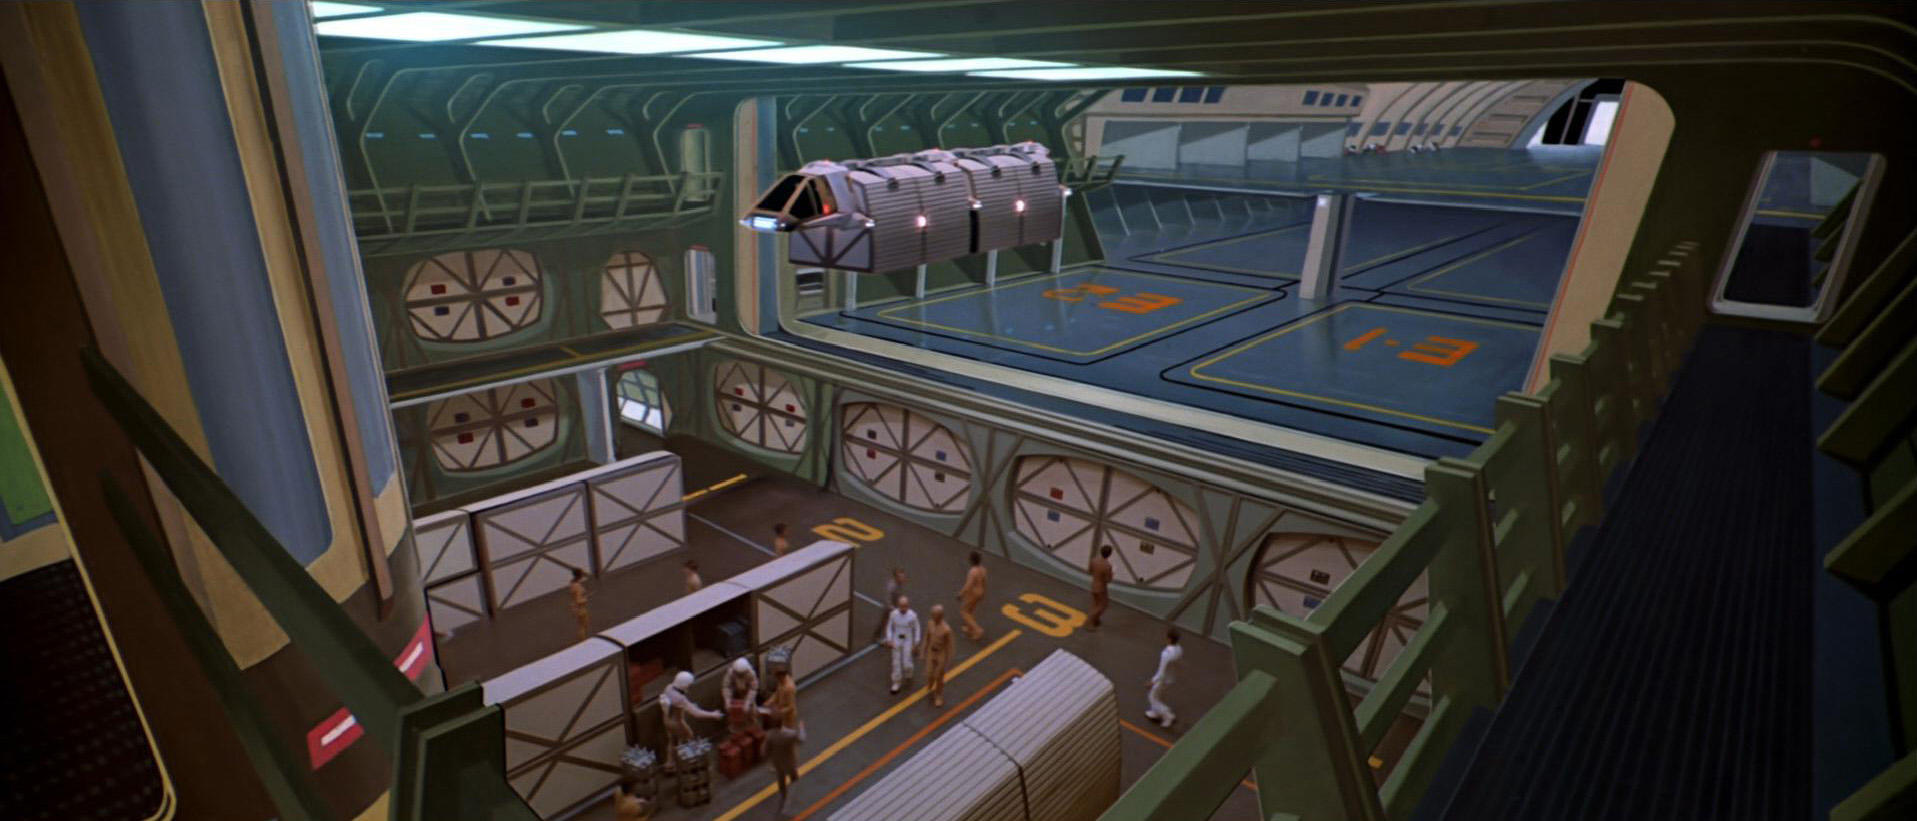 Enterprise cargo bay in the 2009 Blu-ray theatrical cut